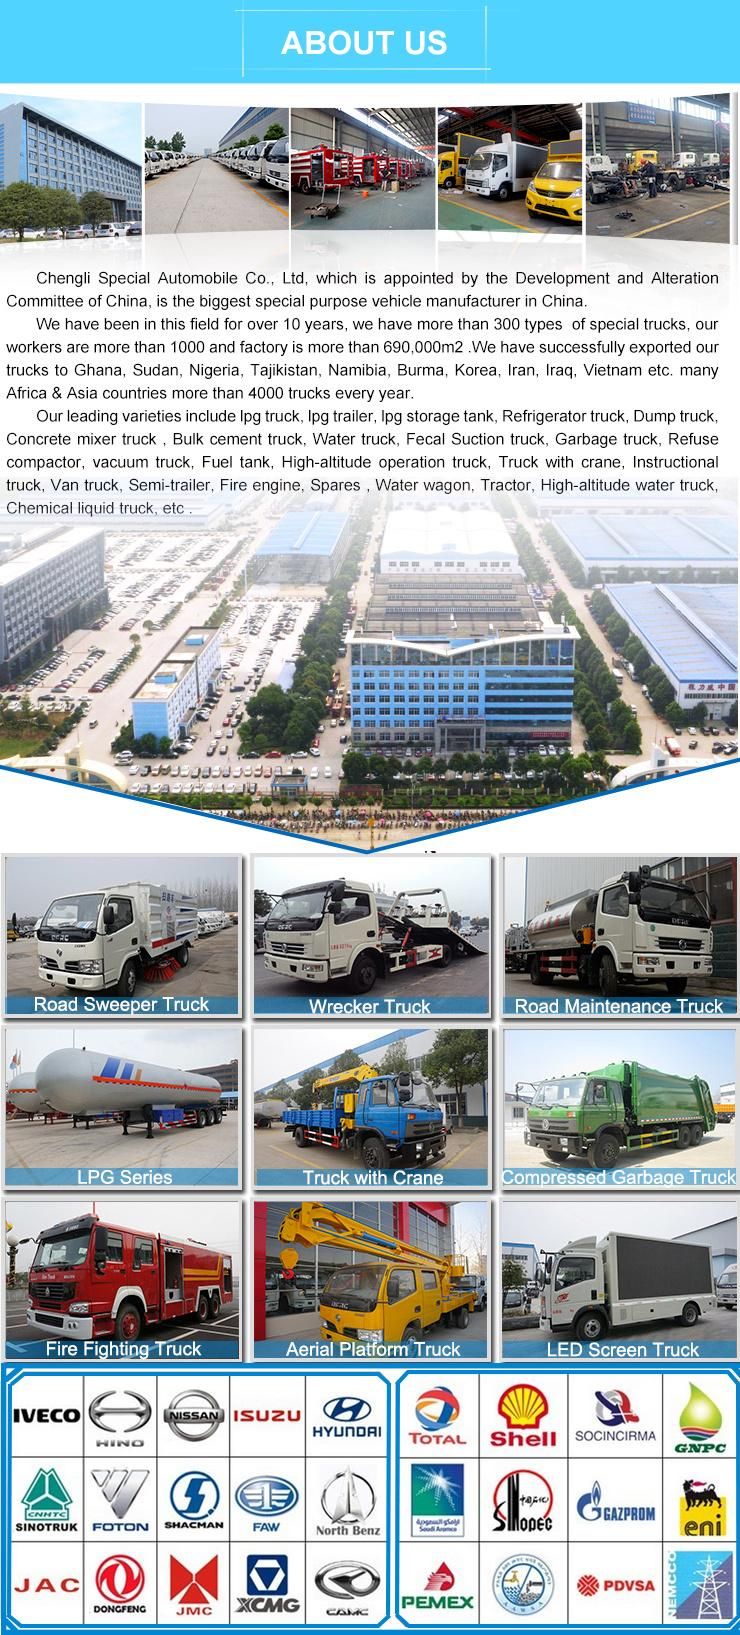 Isuzu High Pressure Industrial Jet VAC Drain Cleaning Combination Truck